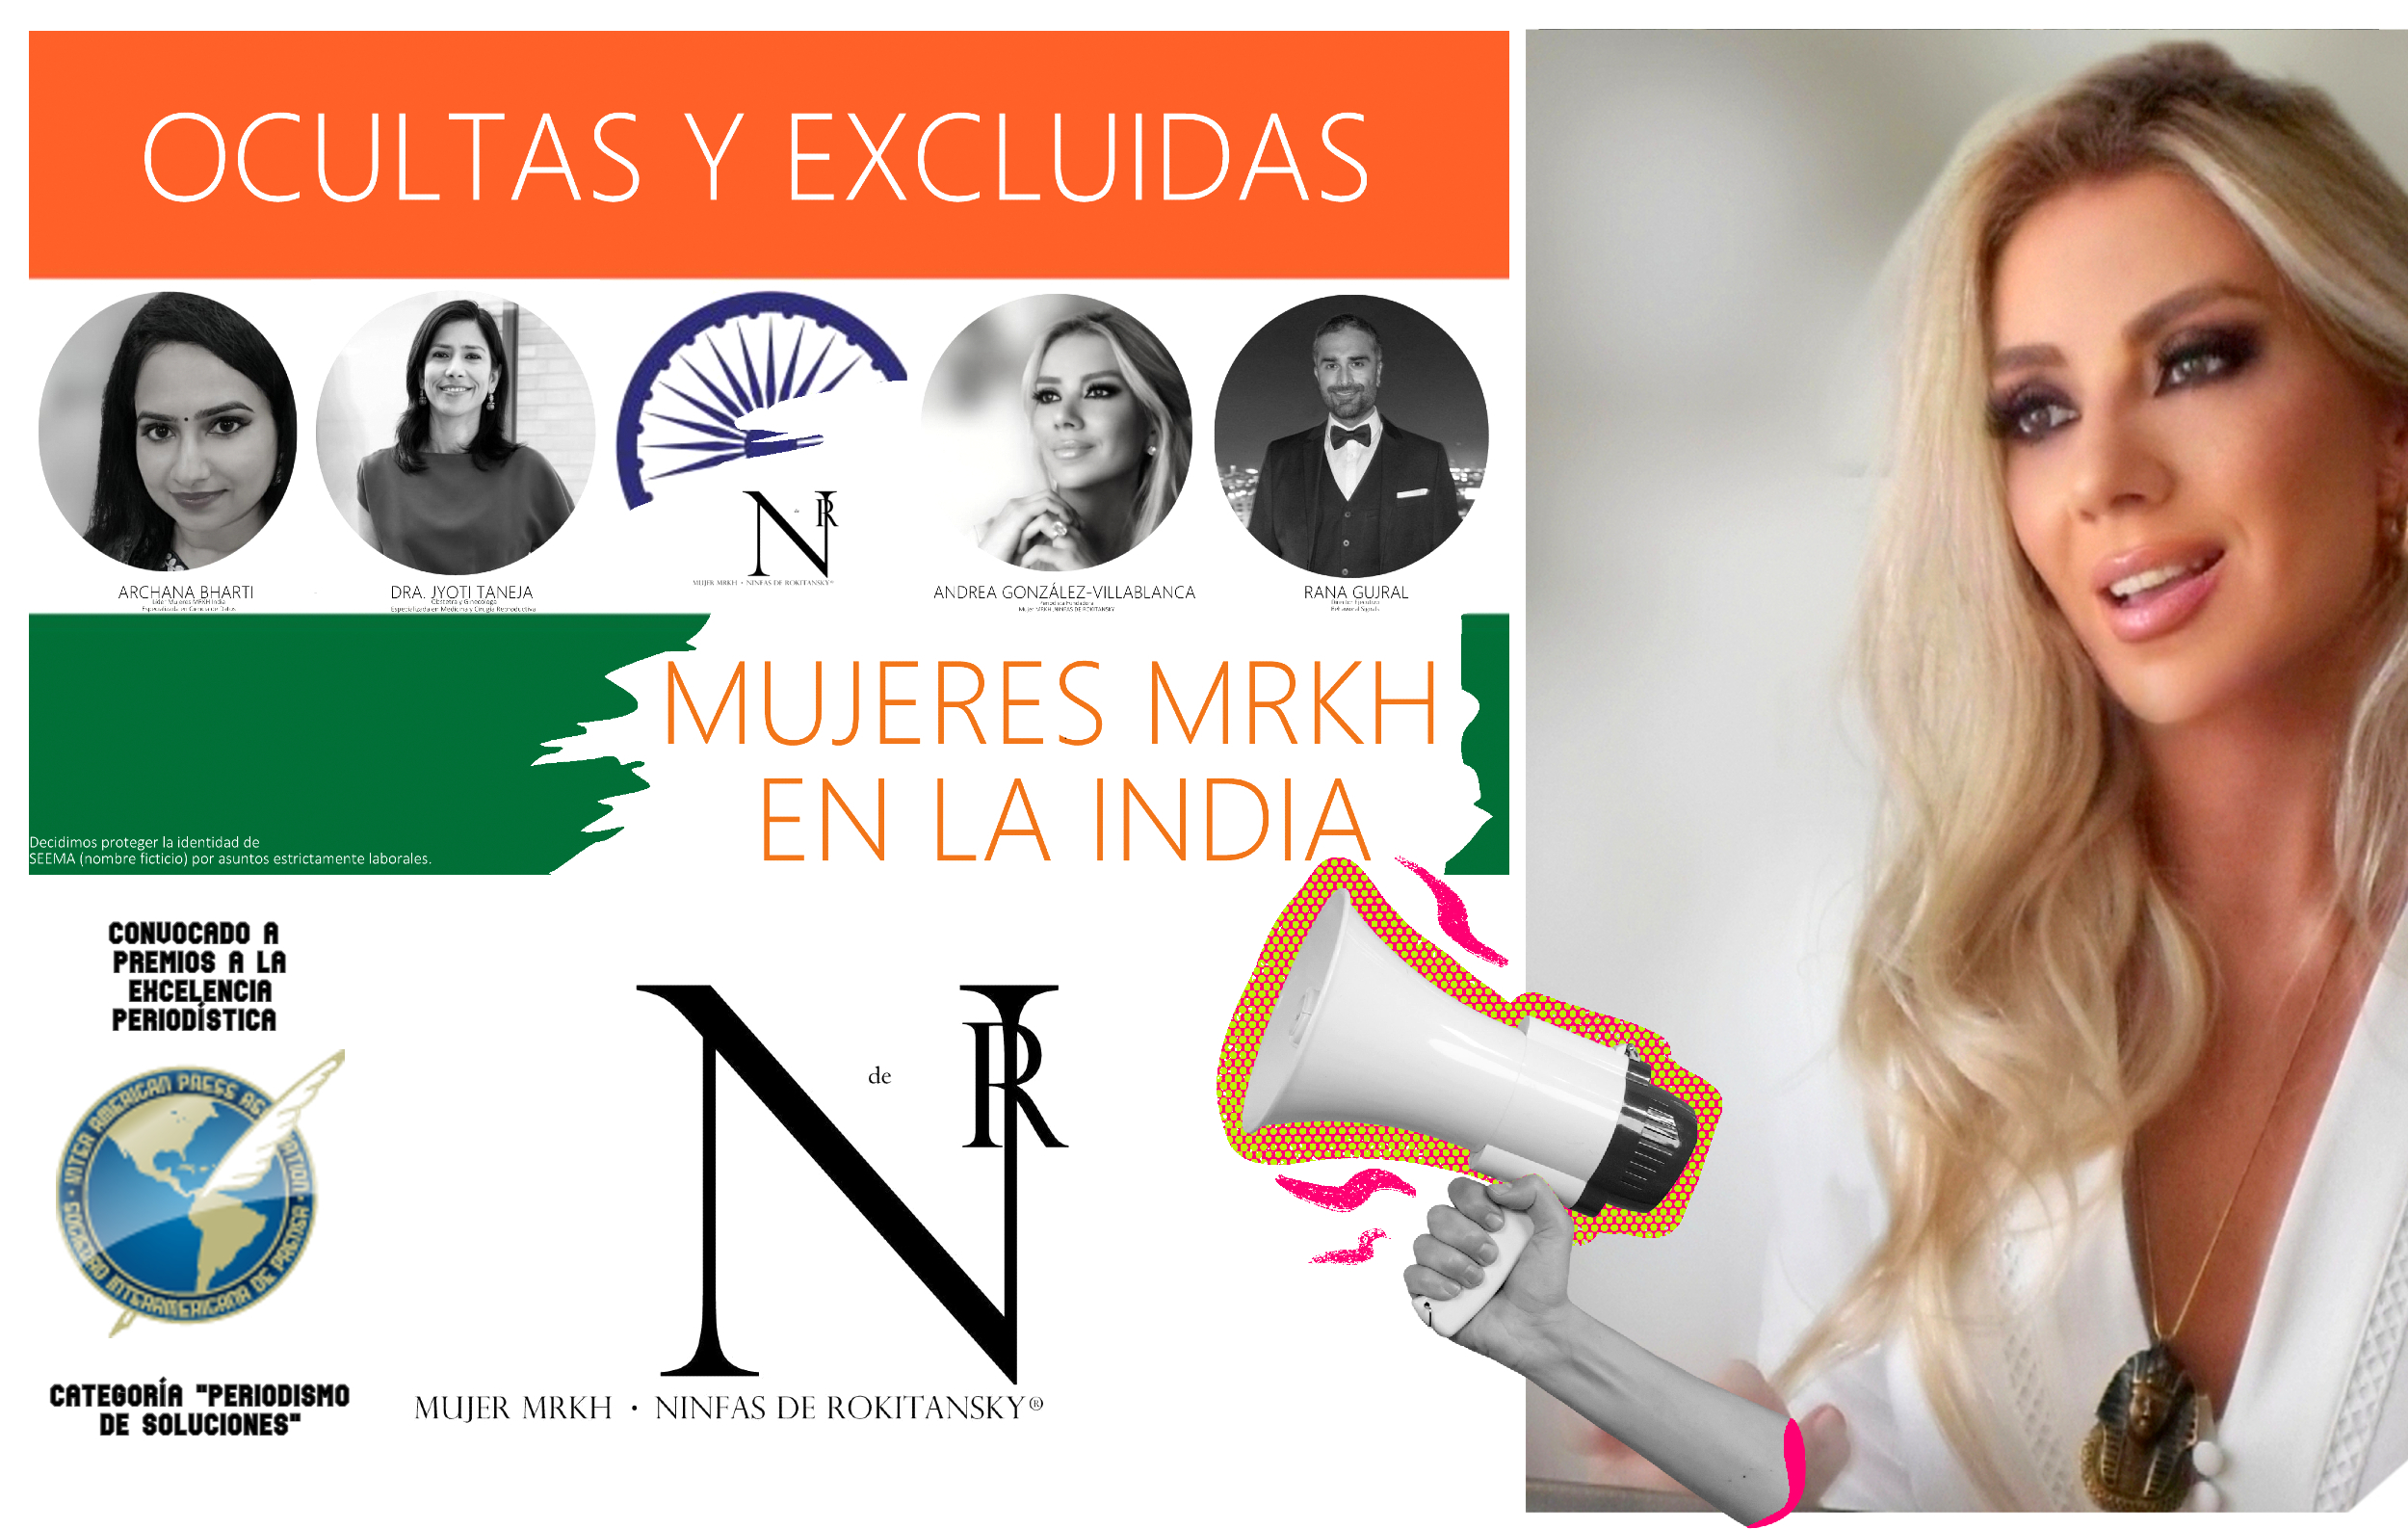  Mujeres MRKH indias: Andrea González-Villablanca convocada a Premios de Excelencia Periodística